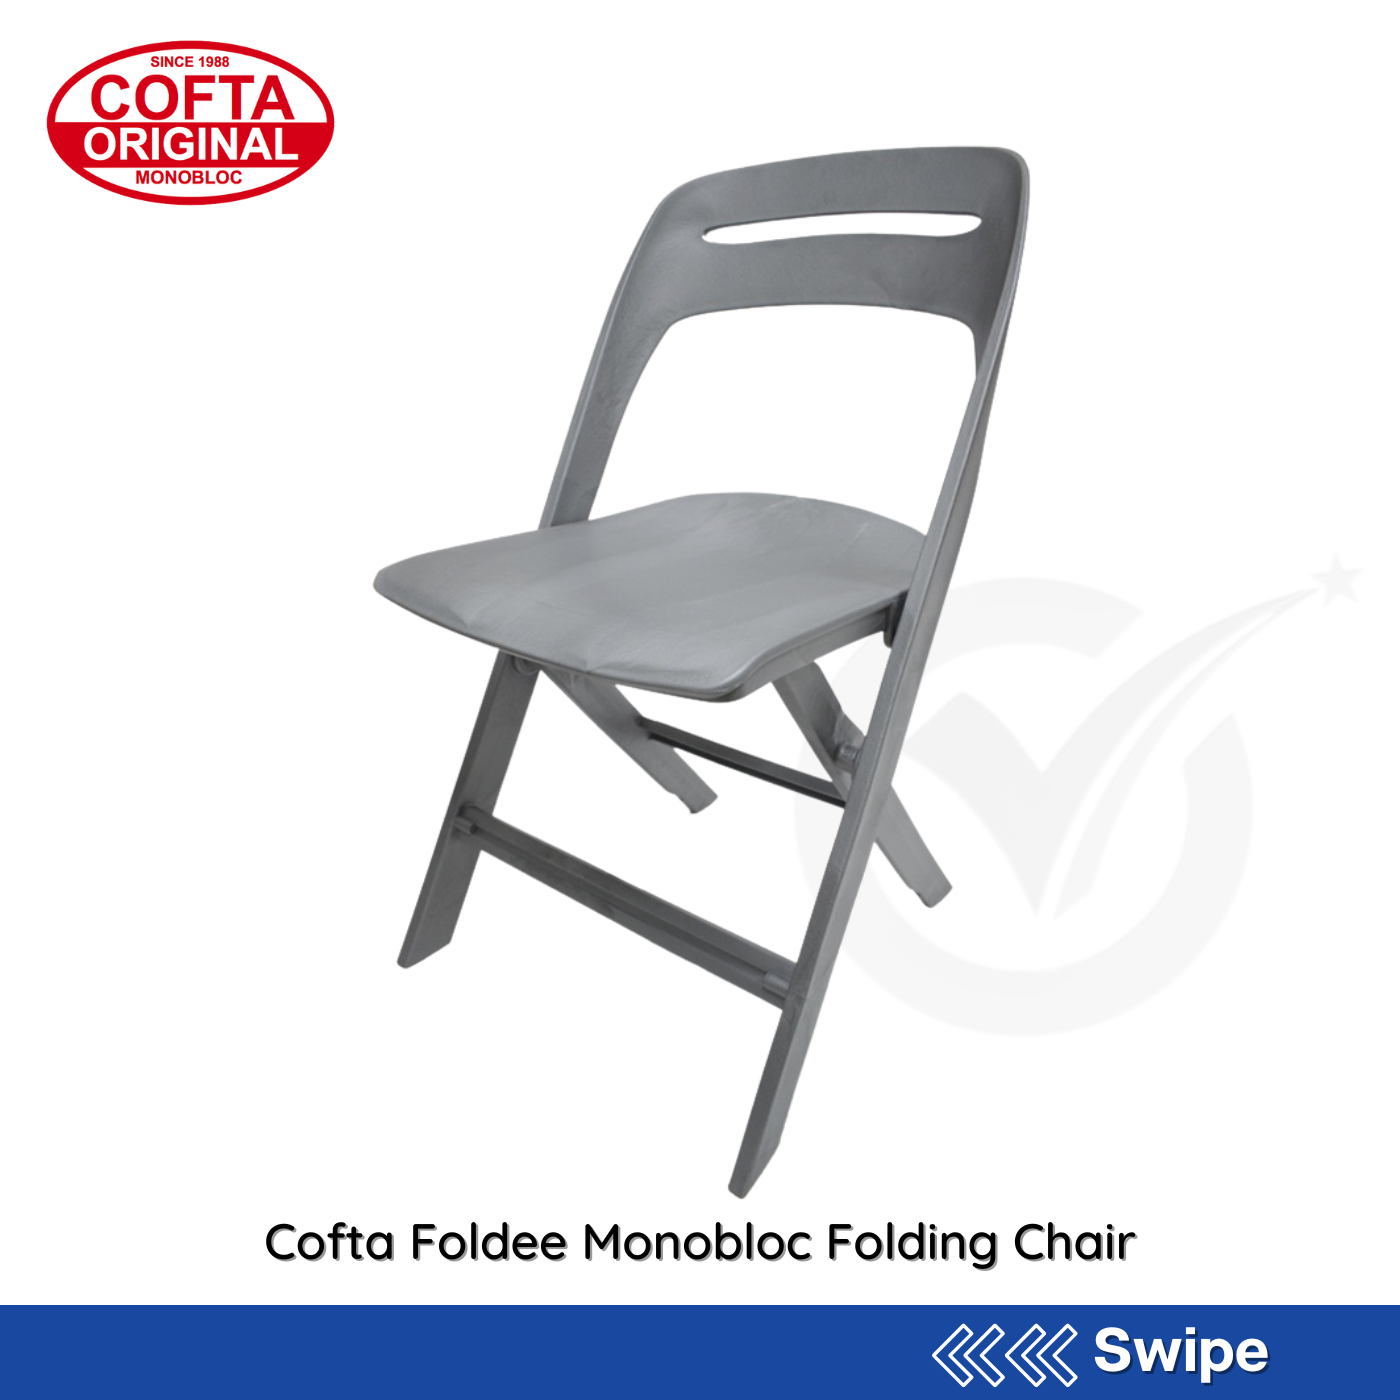 Cofta Foldee Monobloc Folding Chair